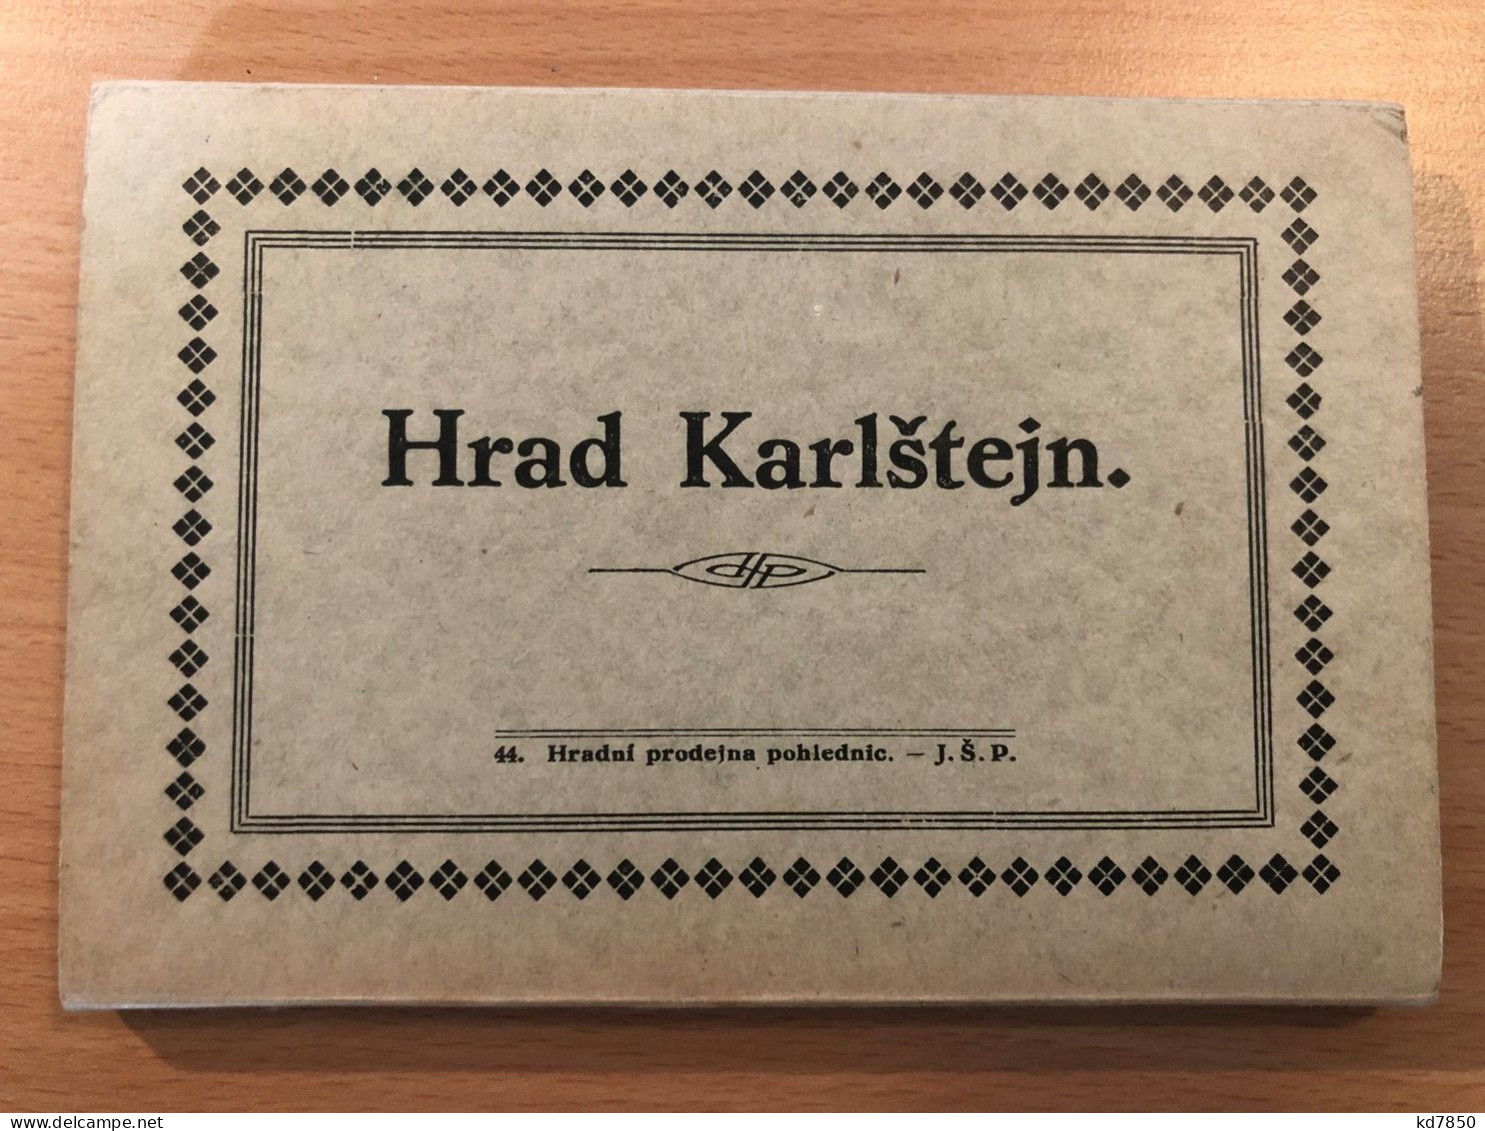 Hrad Karlstejn - Leparello 18 Karten - Czech Republic